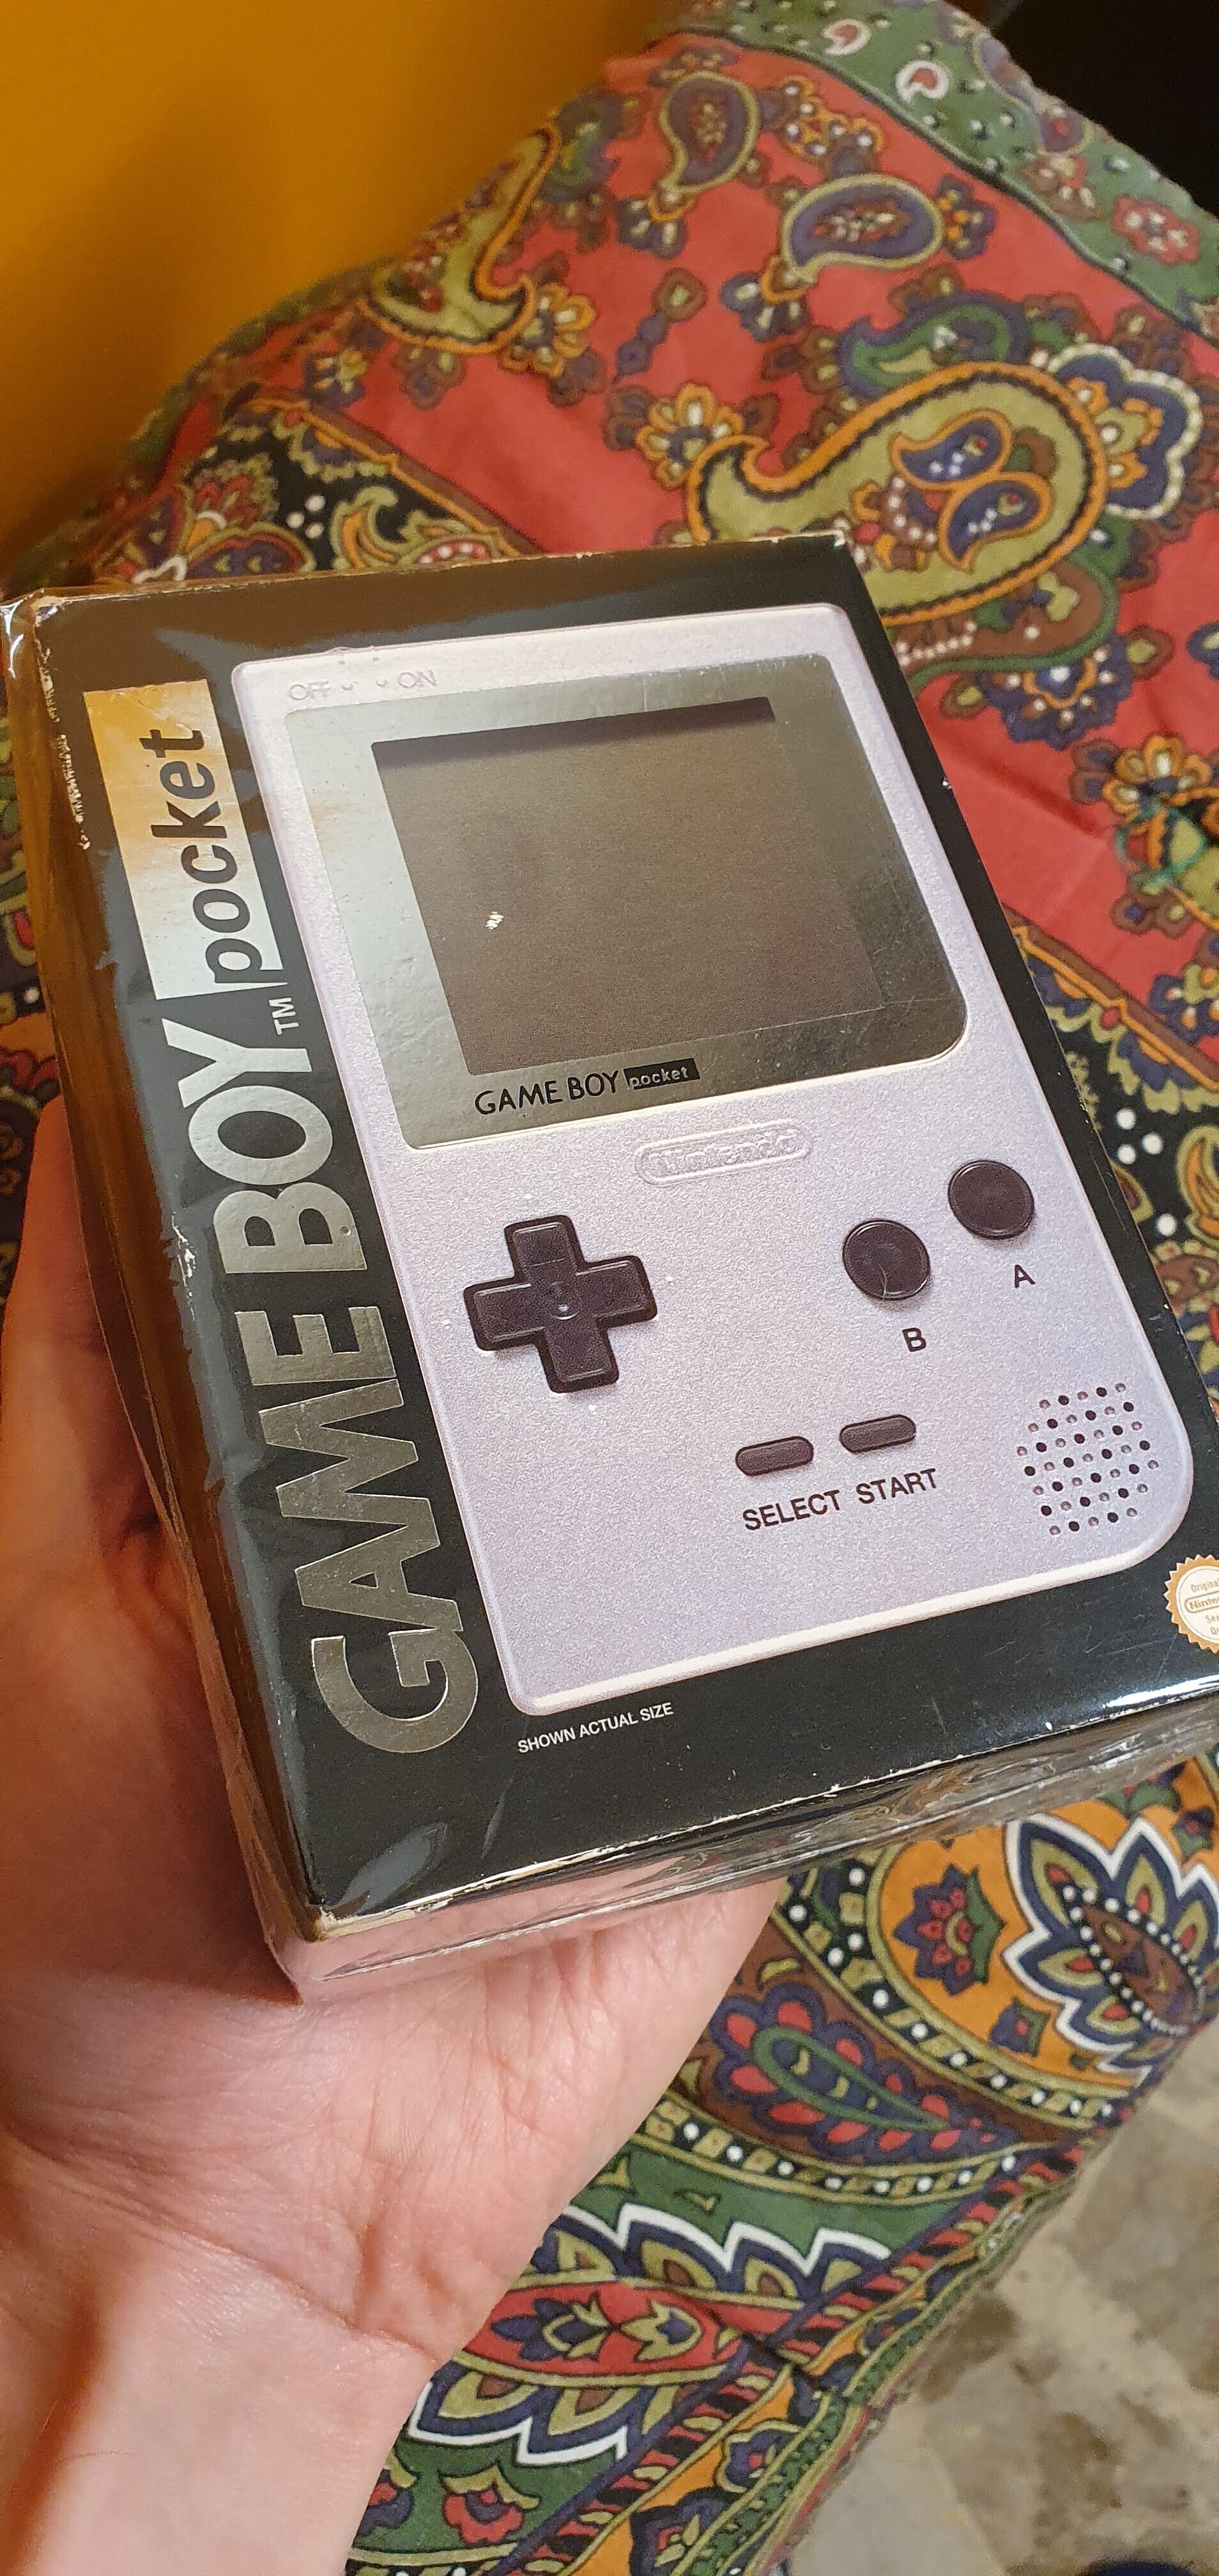  Nintendo Game Boy Pocket Silver Console [UK]